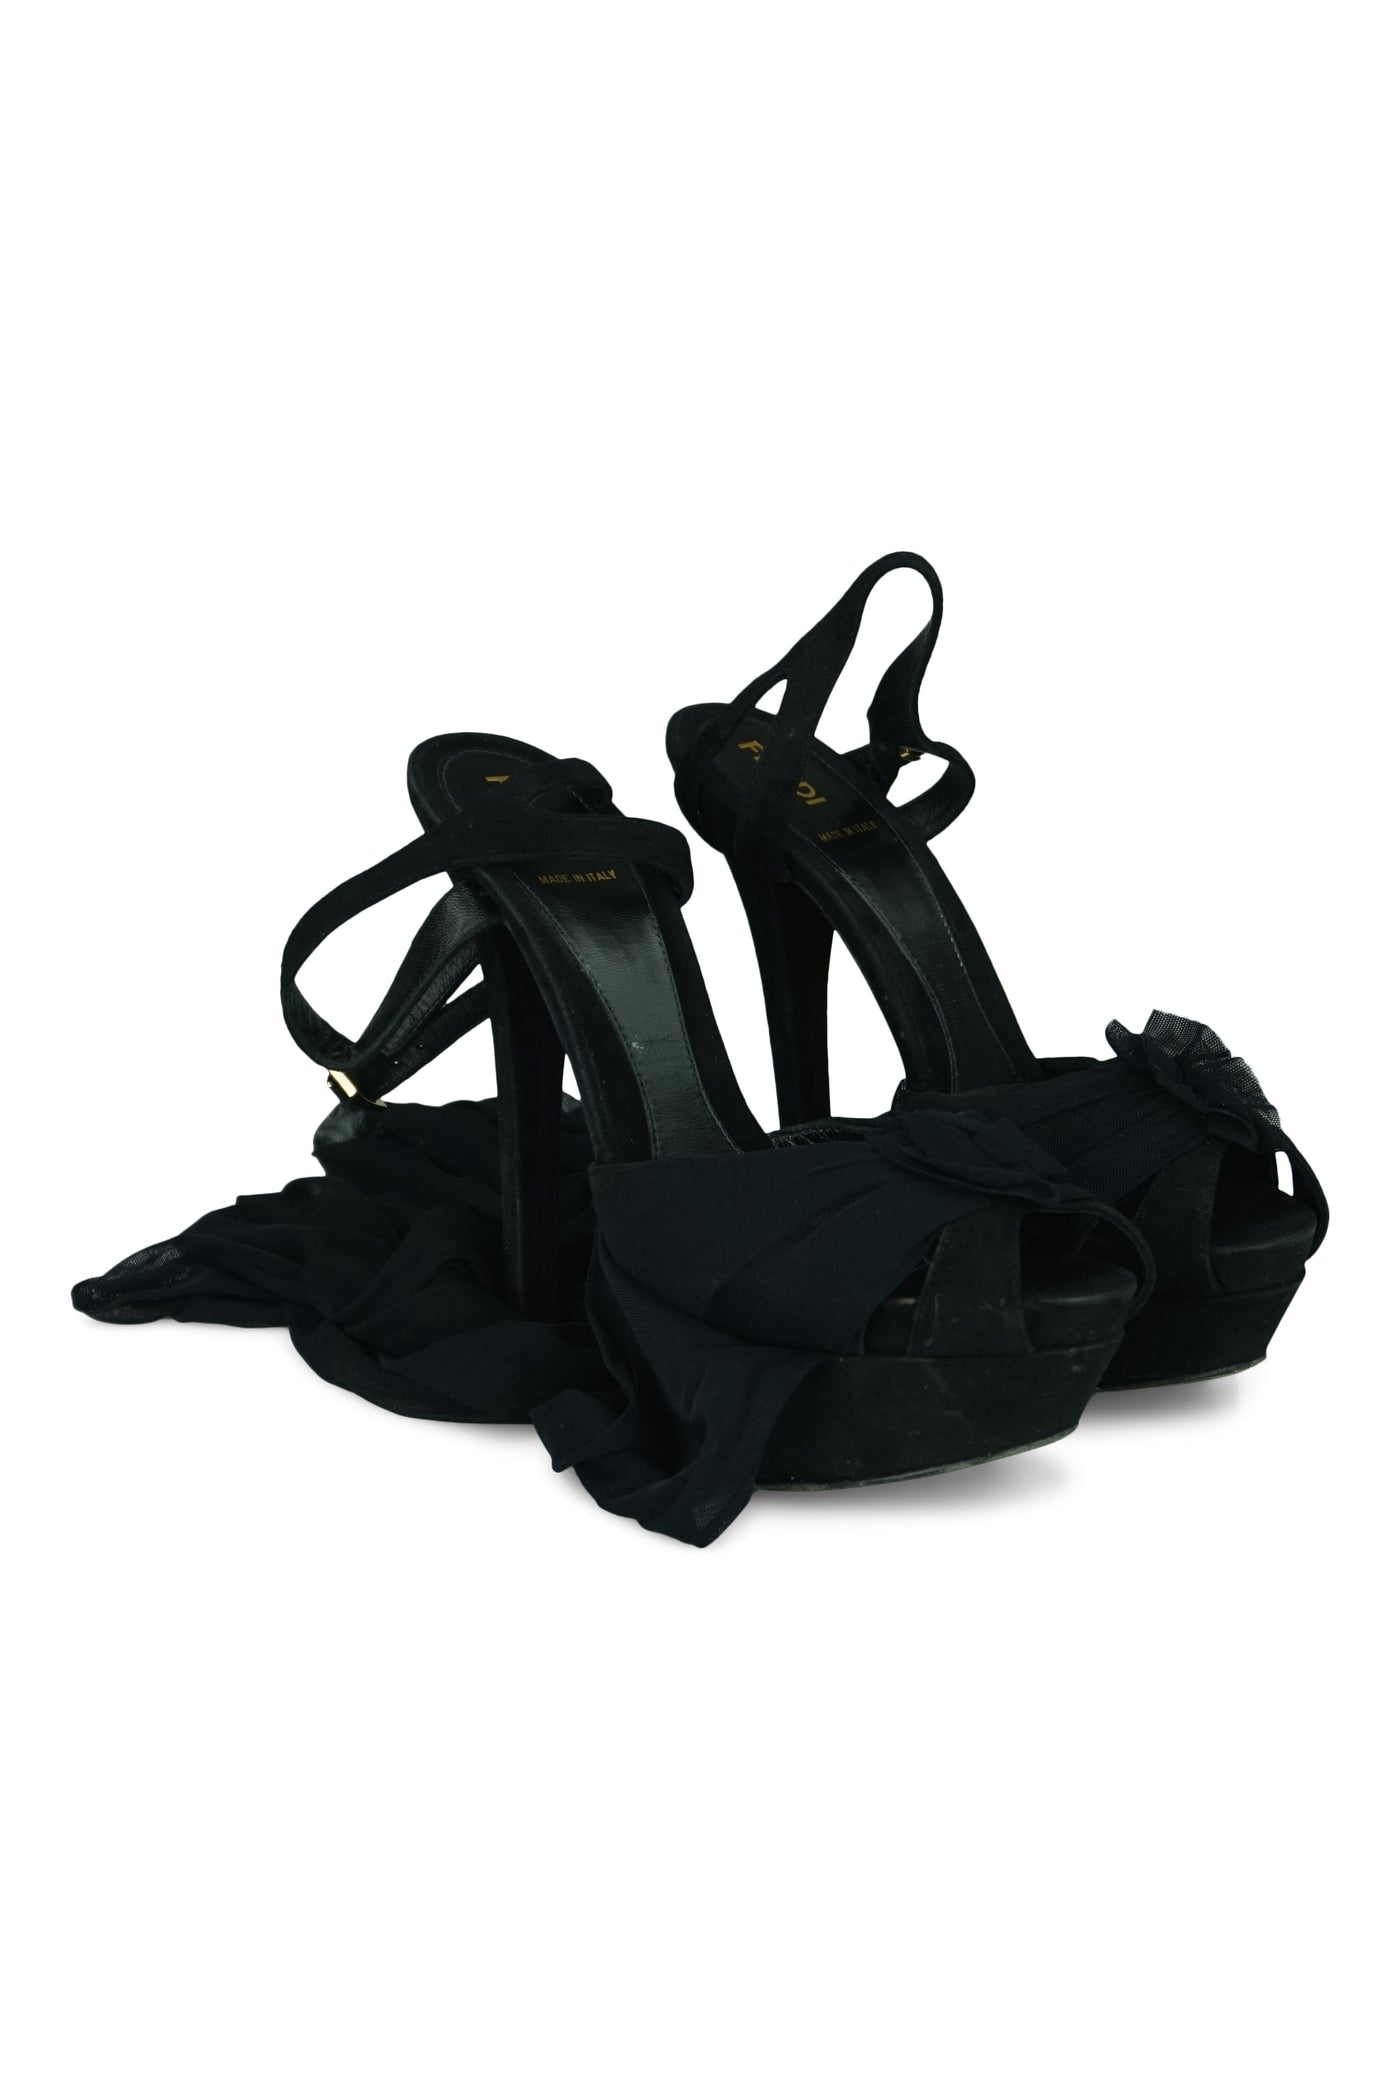 Tied-Up Black Platform Heels